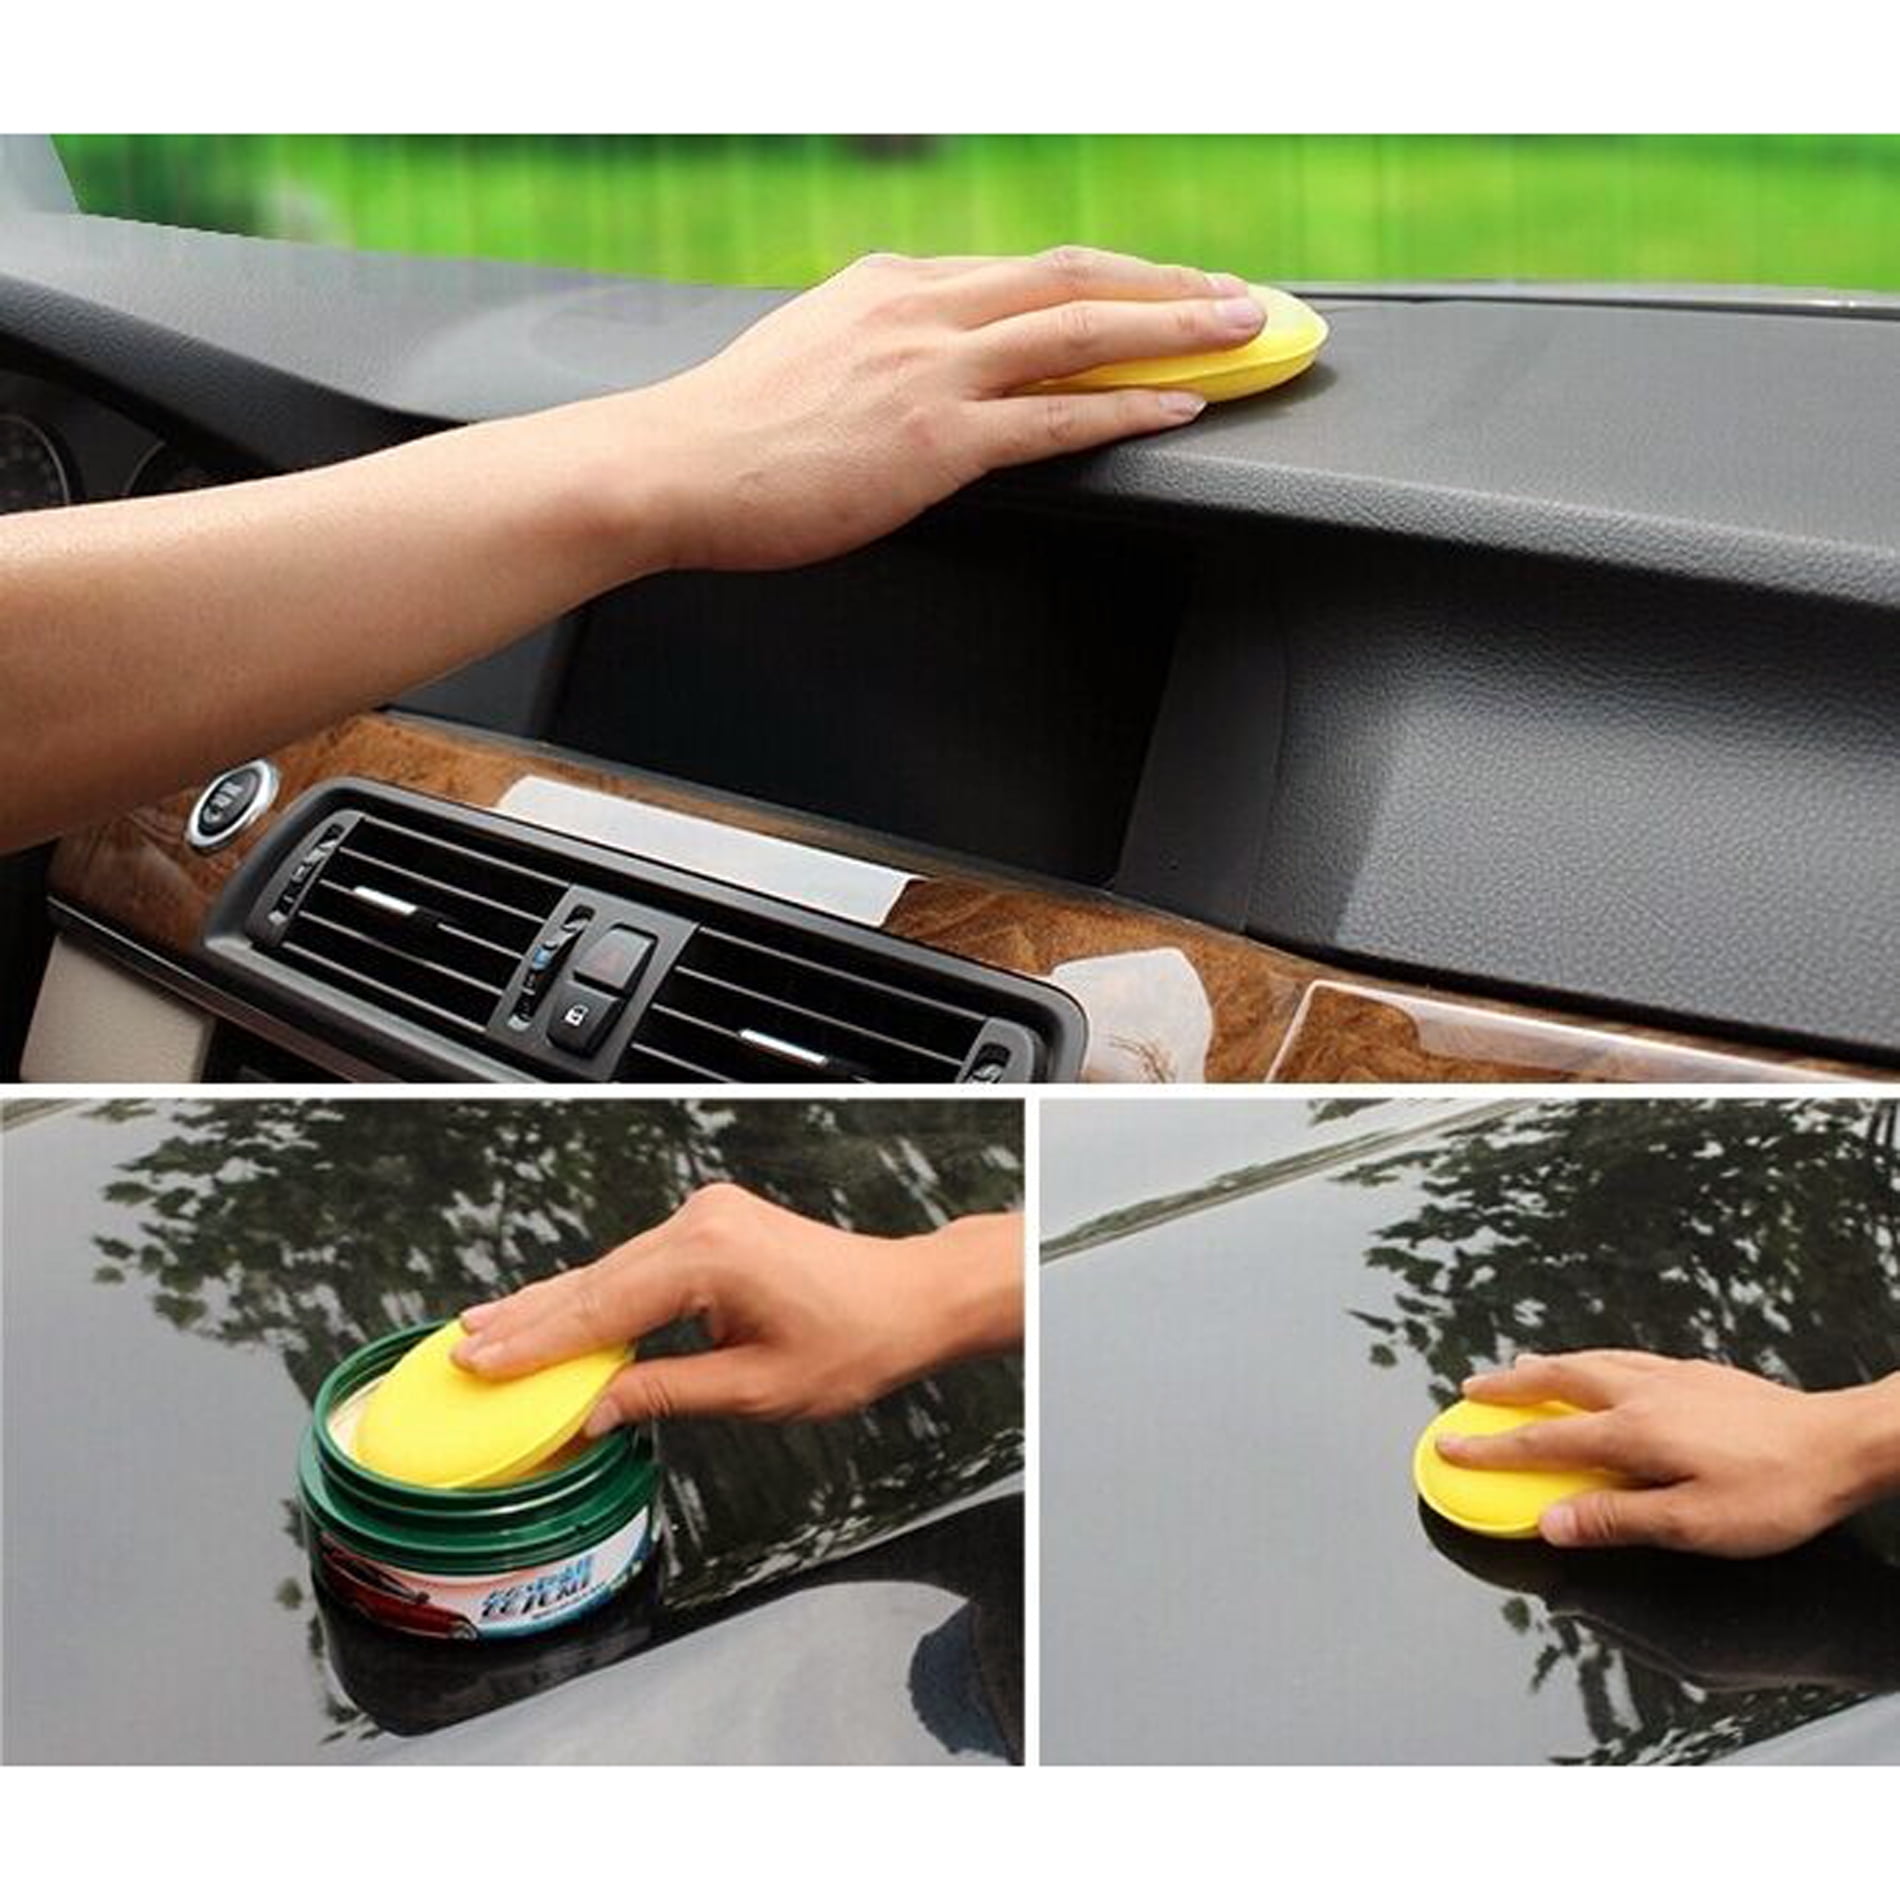 TIHOOD 12PCS 4”Car Wax Applicator/Round Shaped Sponge/Cars Wax Applicator Foam Sponge Ultra-Soft Cleaning Tool